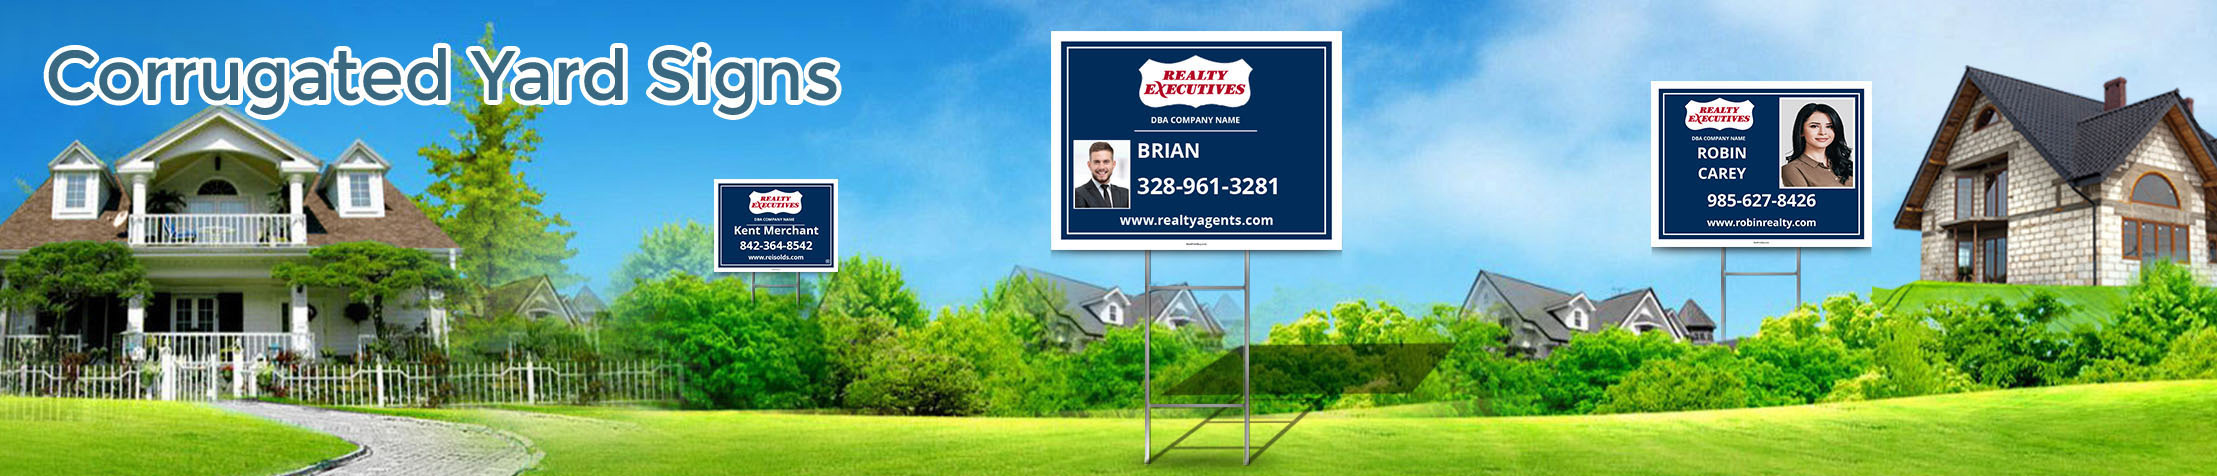 Realty Executives Real Estate Corrugated Yard Signs - Realty Executives real estate signs | BestPrintBuy.com